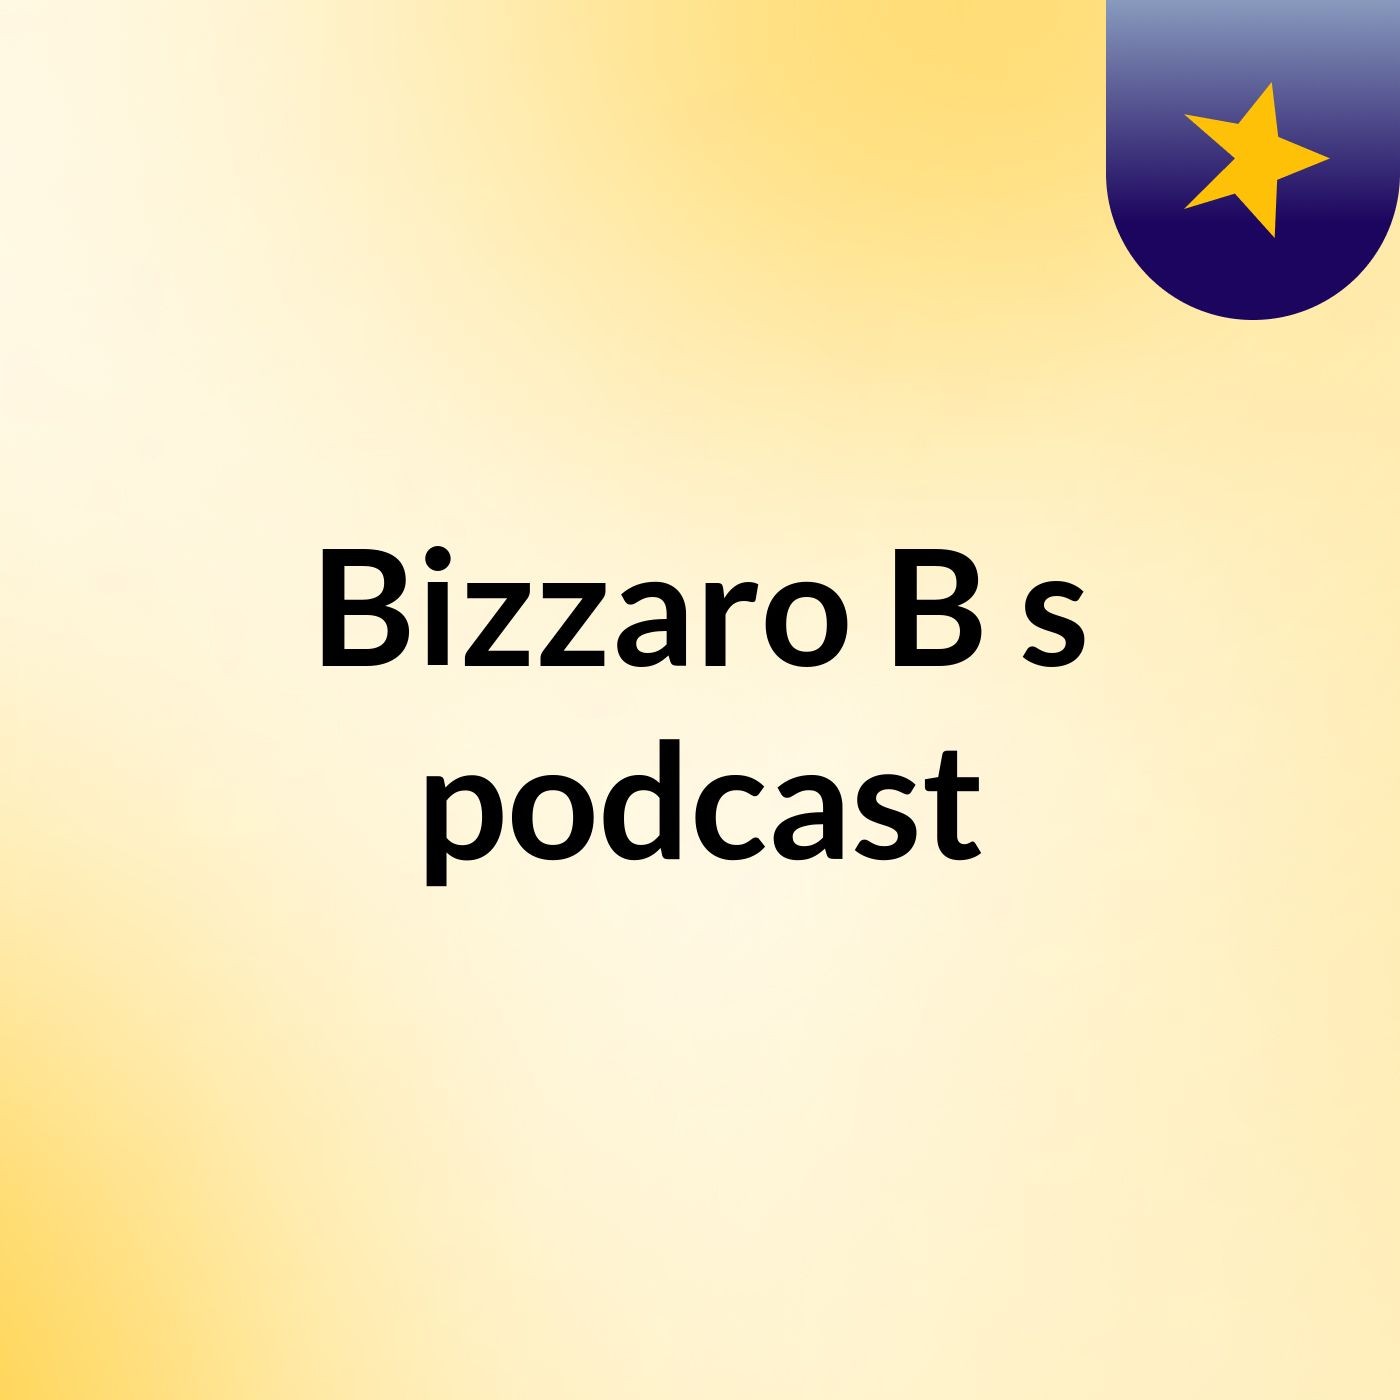 Bizzaro B's podcast